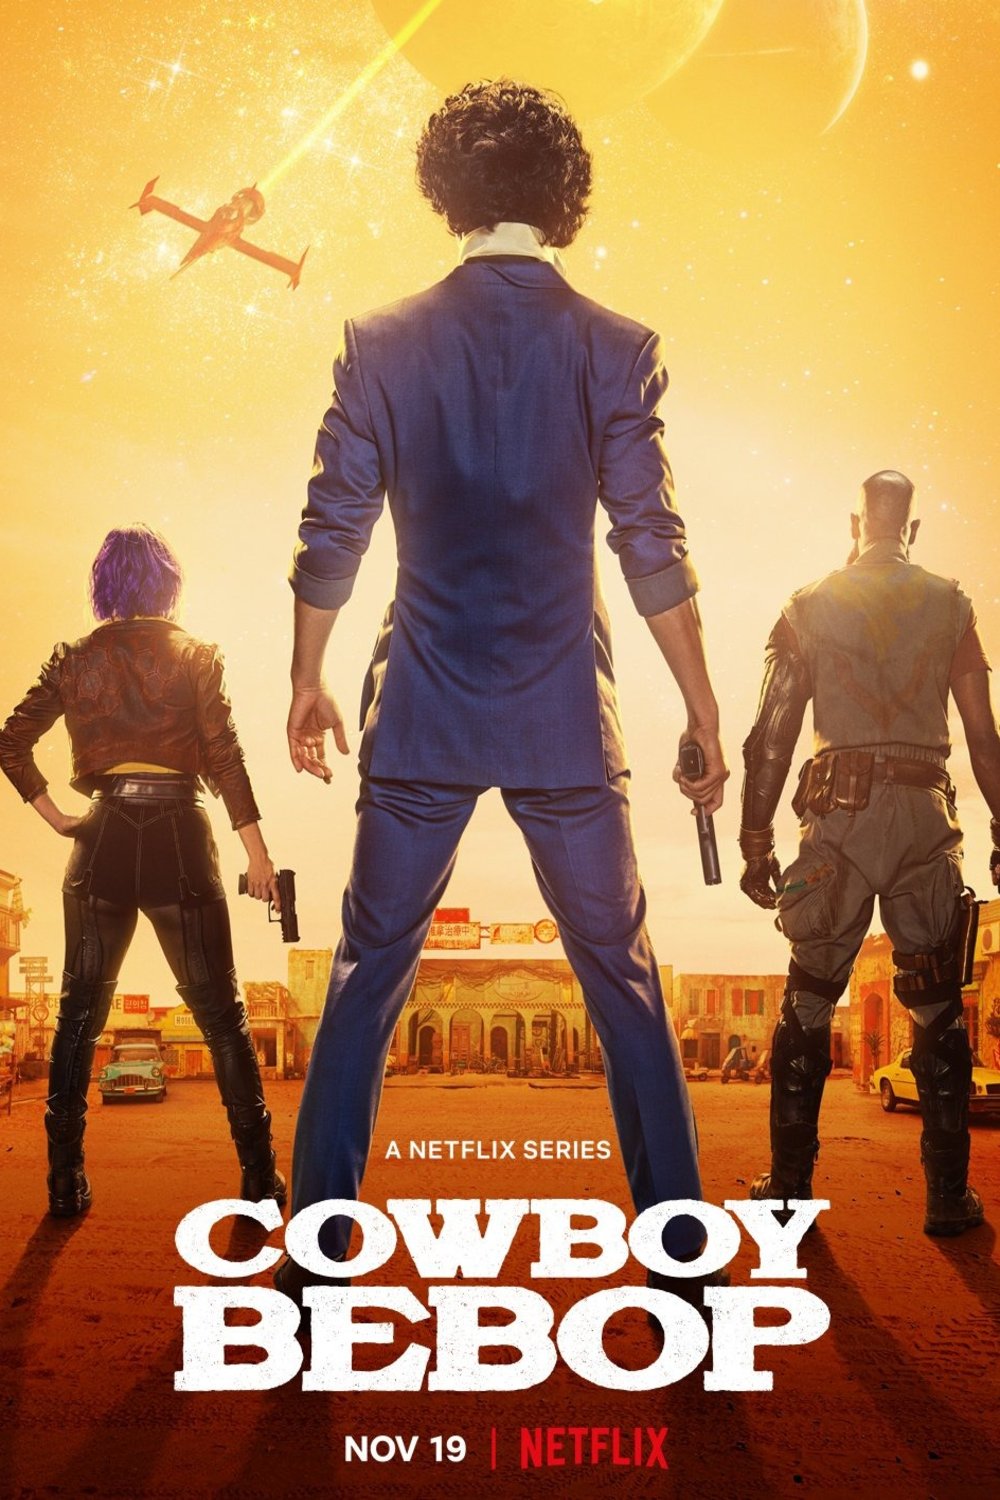 Poster of the movie Cowboy Bebop